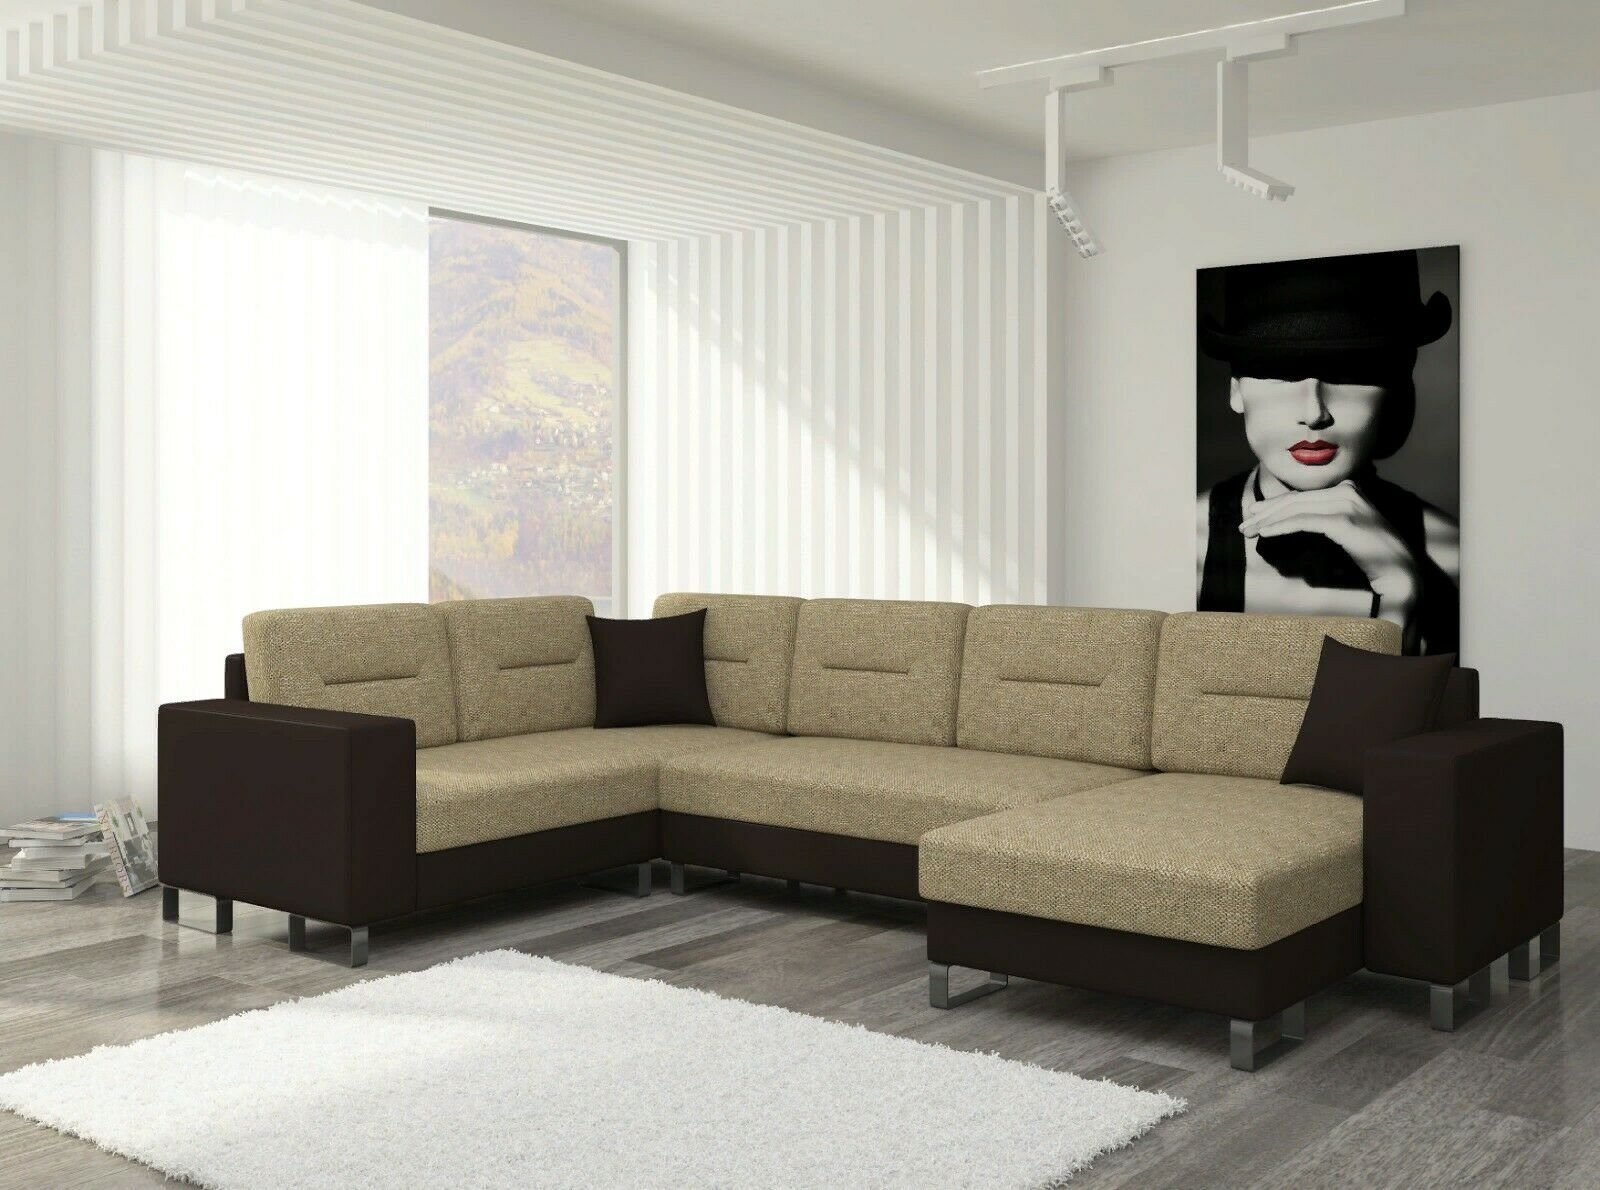 JVmoebel Ecksofa Design Ecksofa Schlafsofa Bettfunktion Couch Leder Polster Textil, Mit Bettfunktion Beige/Braun